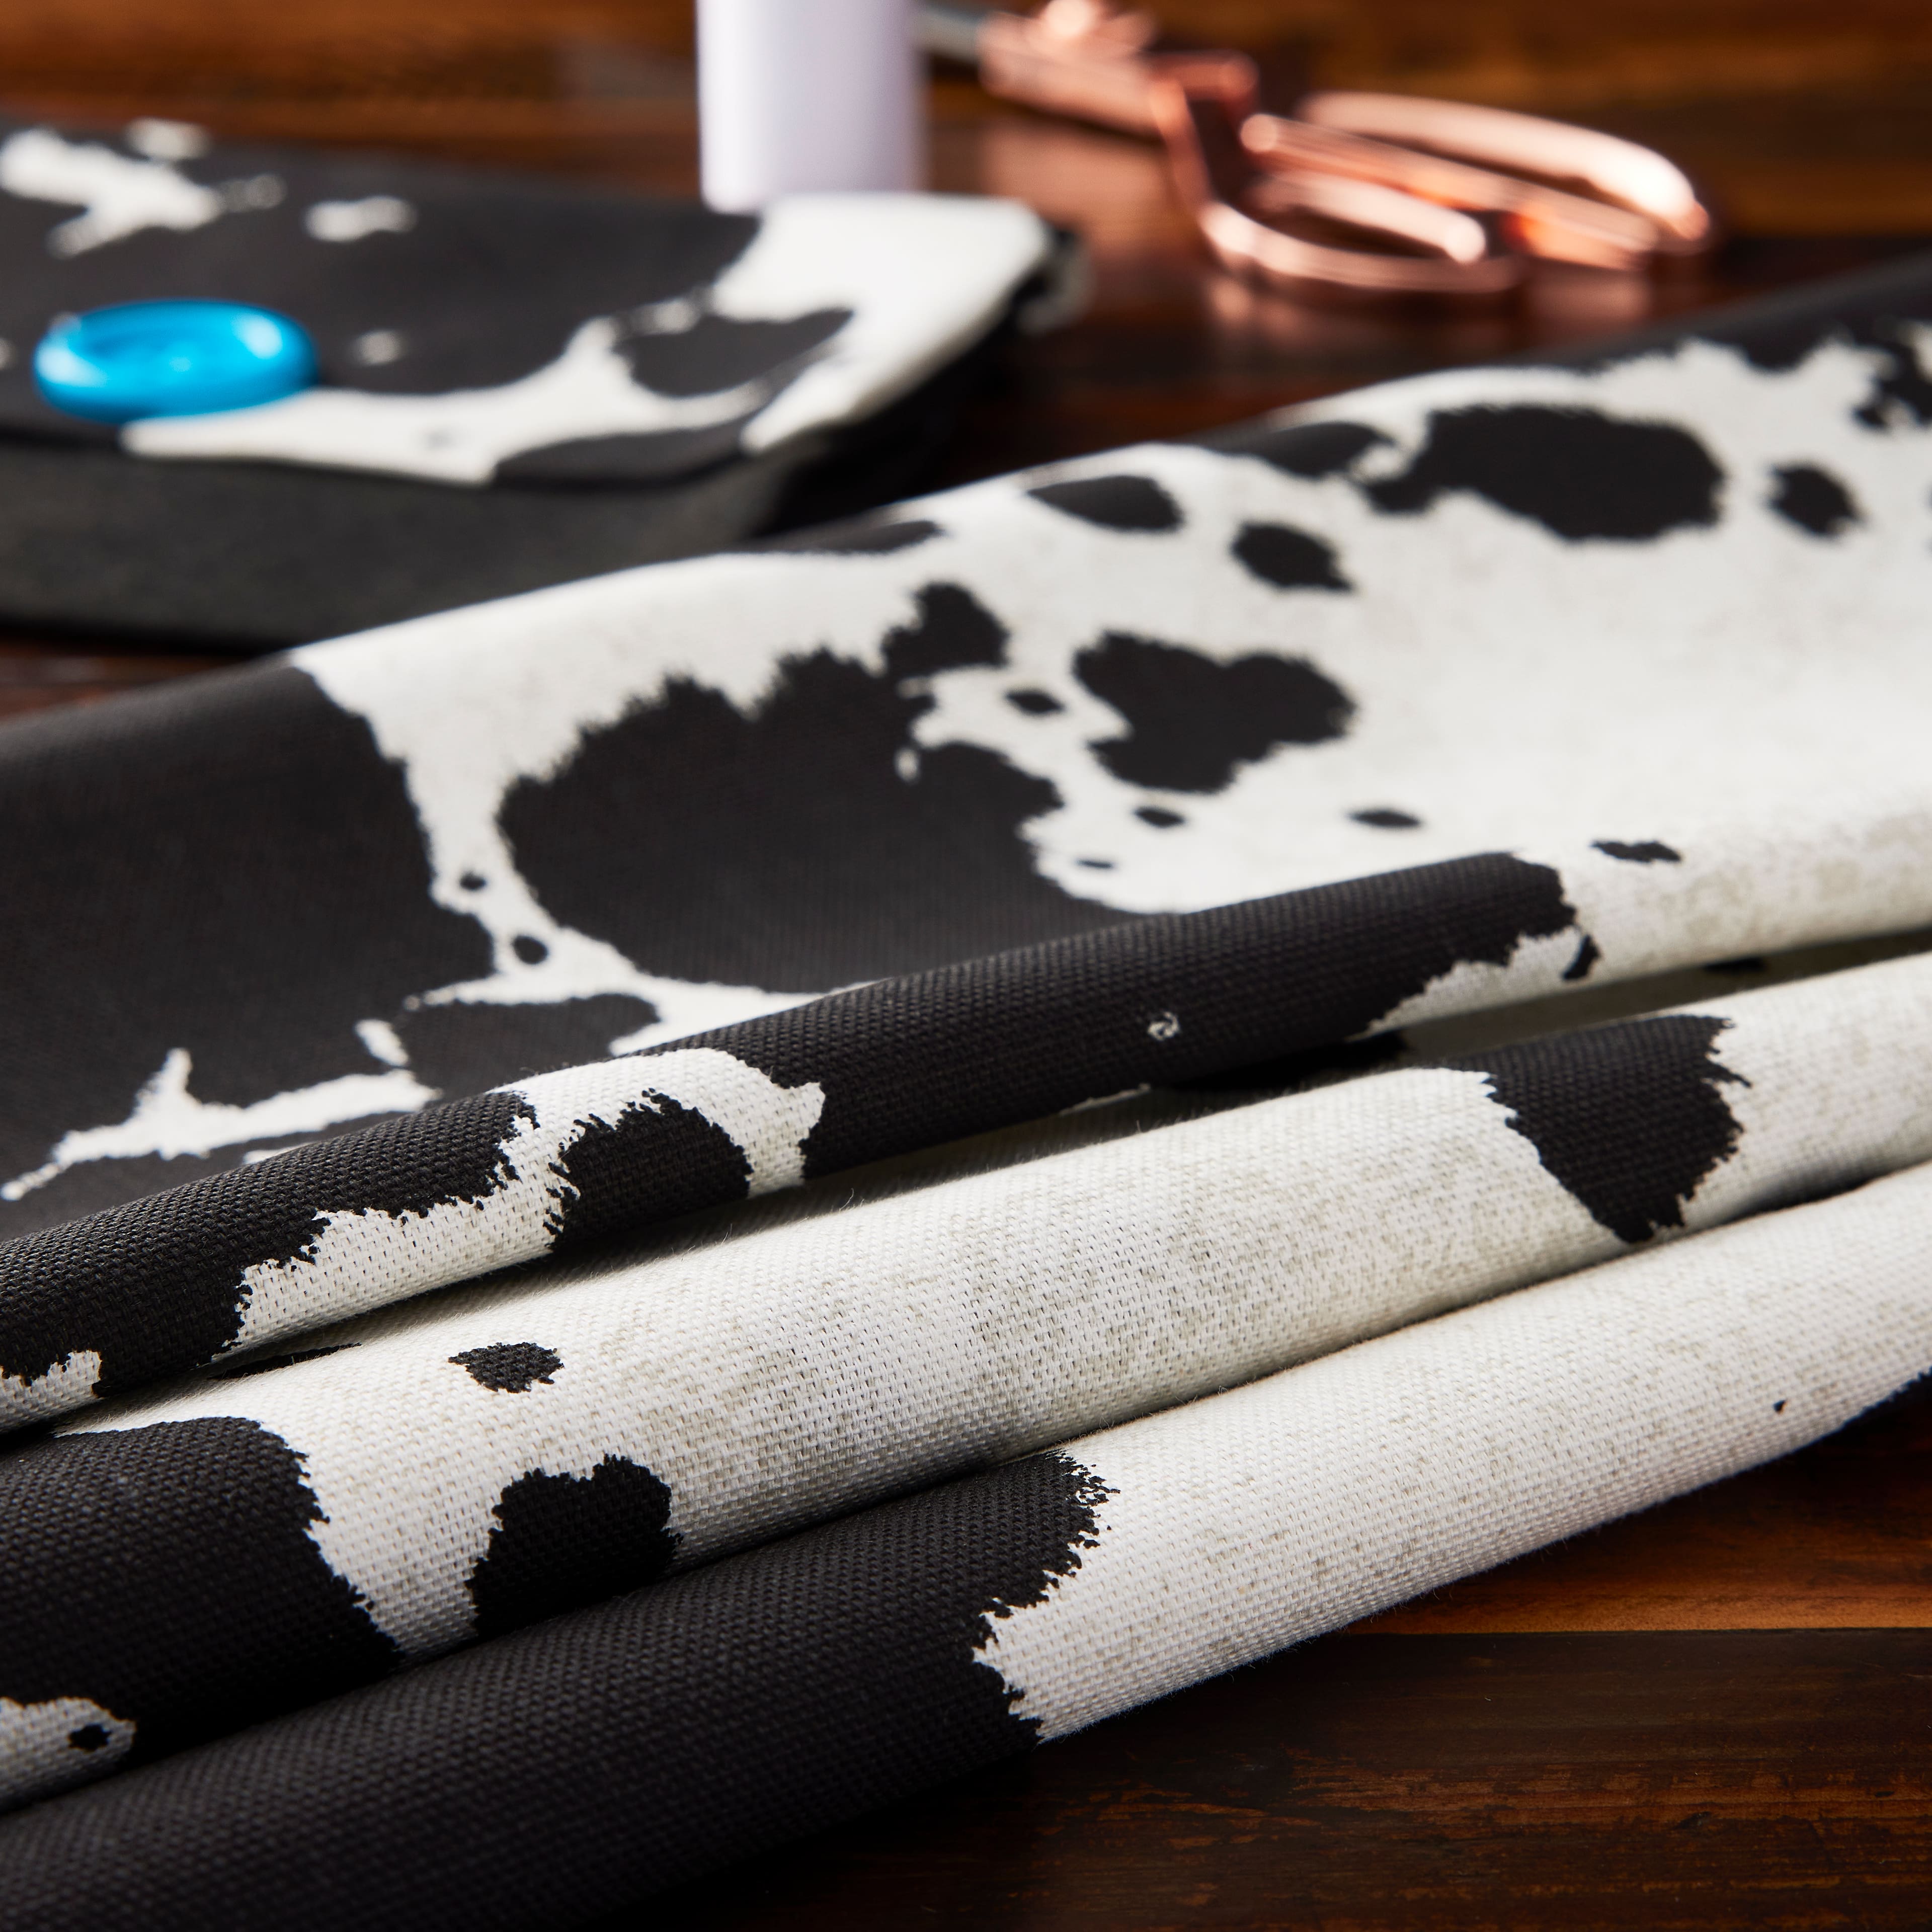 Richloom Black Cowhide Home Decor Fabric | 45 | Michaels